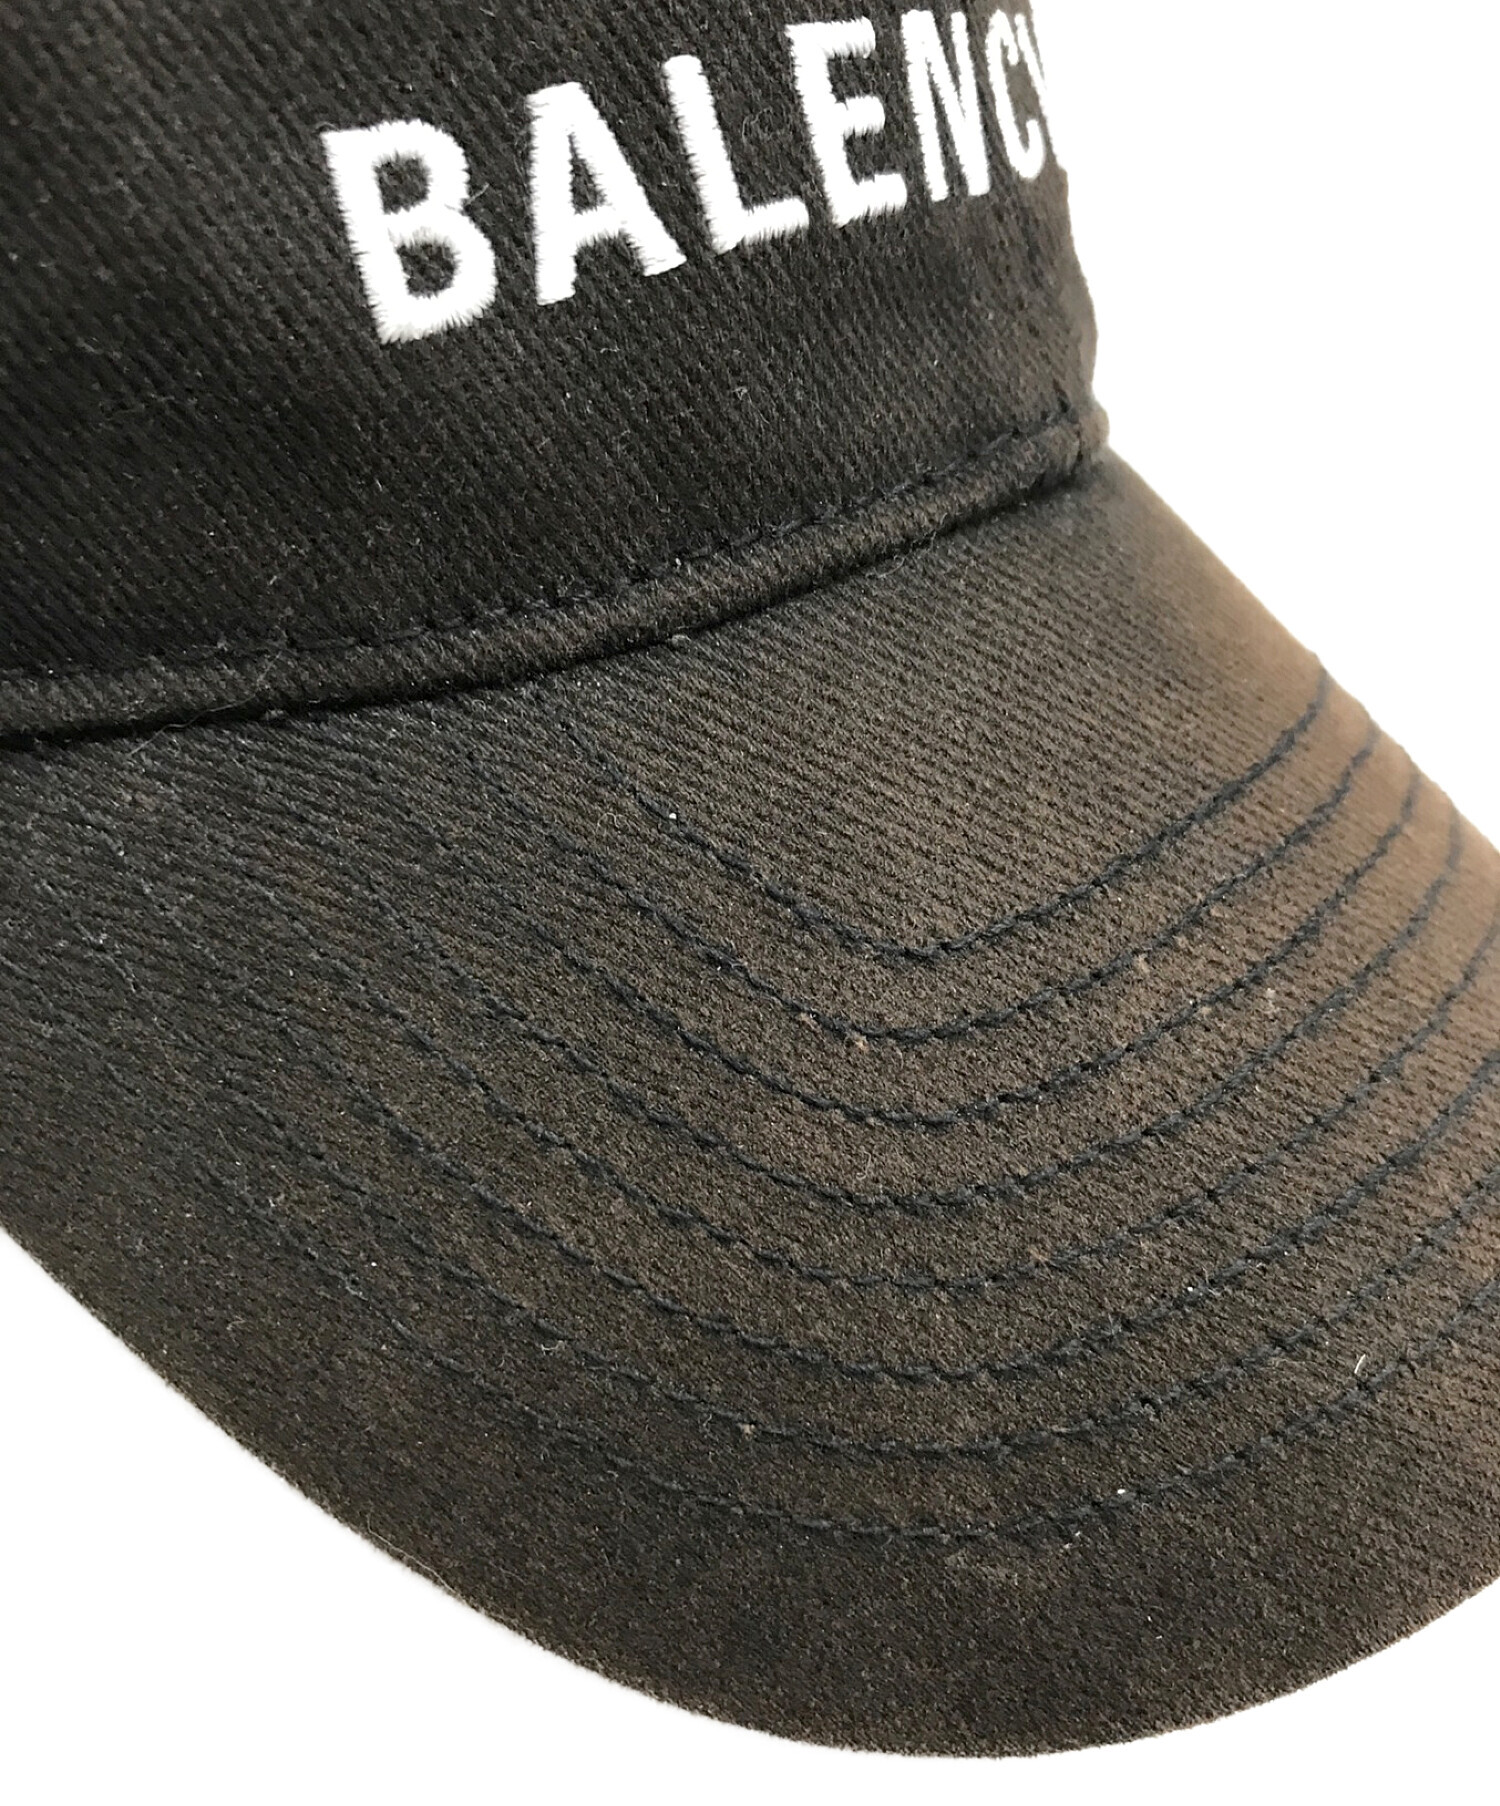 BALENCIAGA (バレンシアガ) ロゴベースボールキャップ ブラック サイズ:59cm